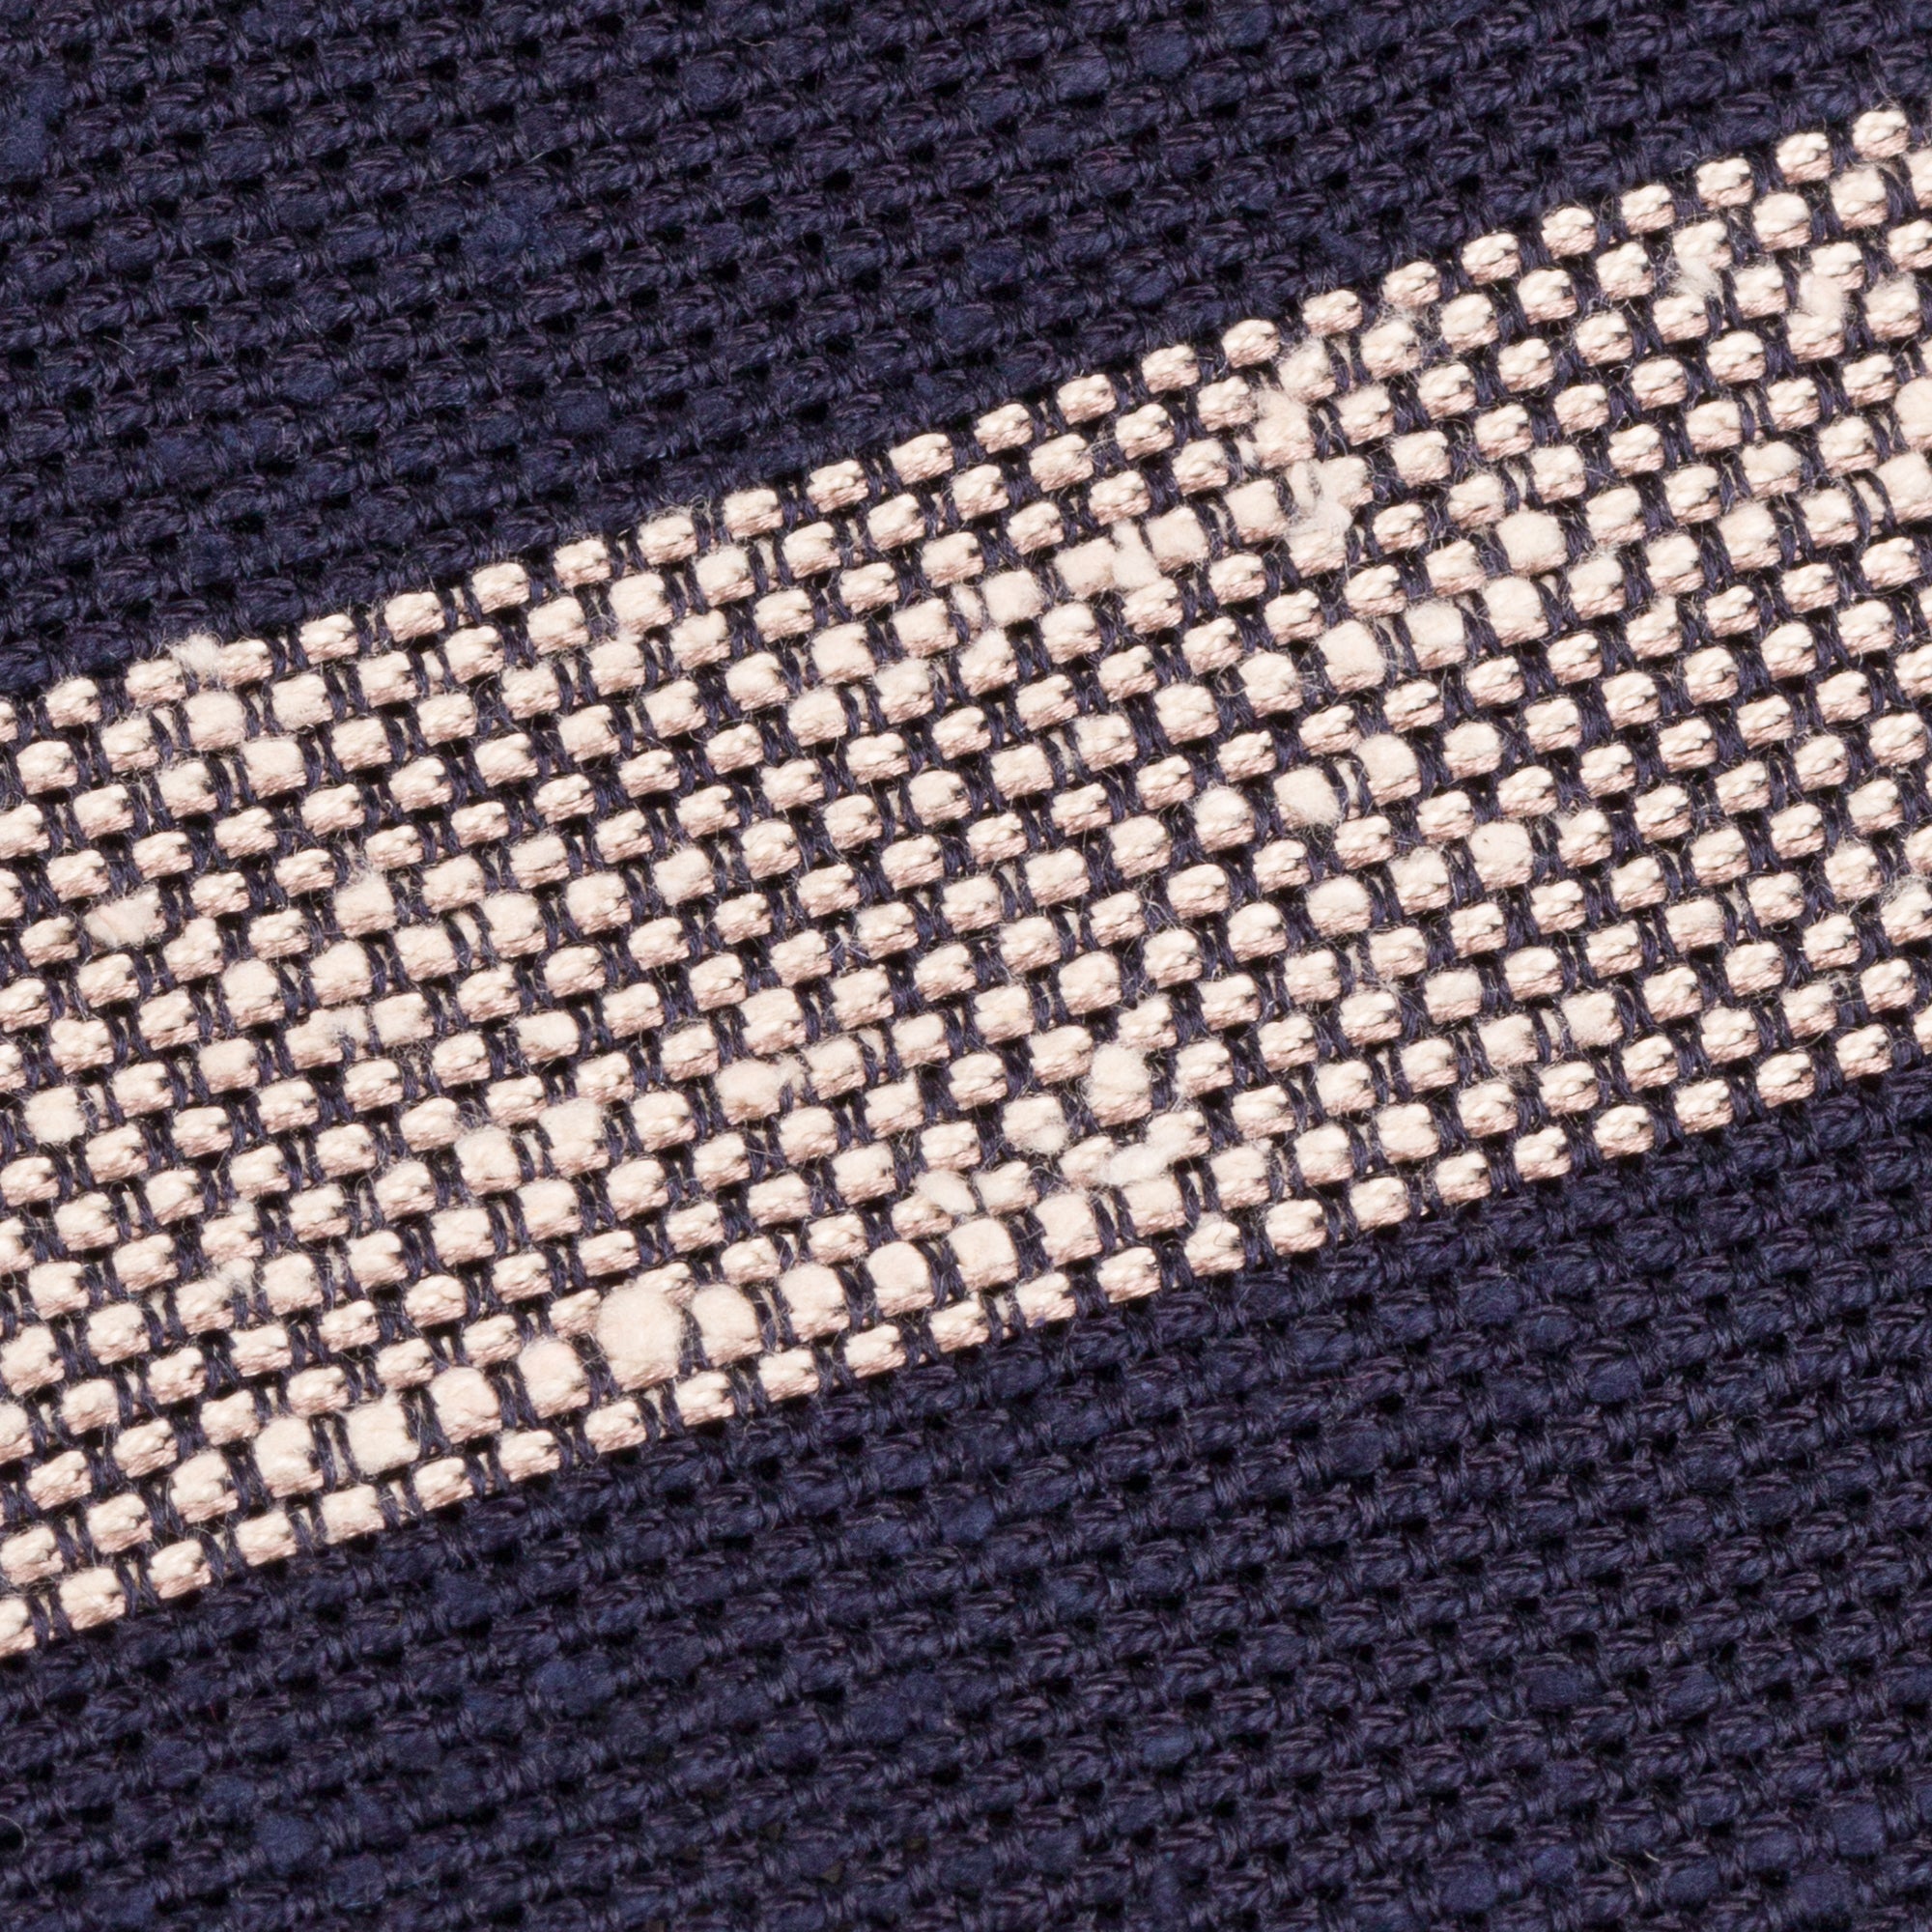 Navy & Ecru Block Stripe Shantung Grenadine Tie